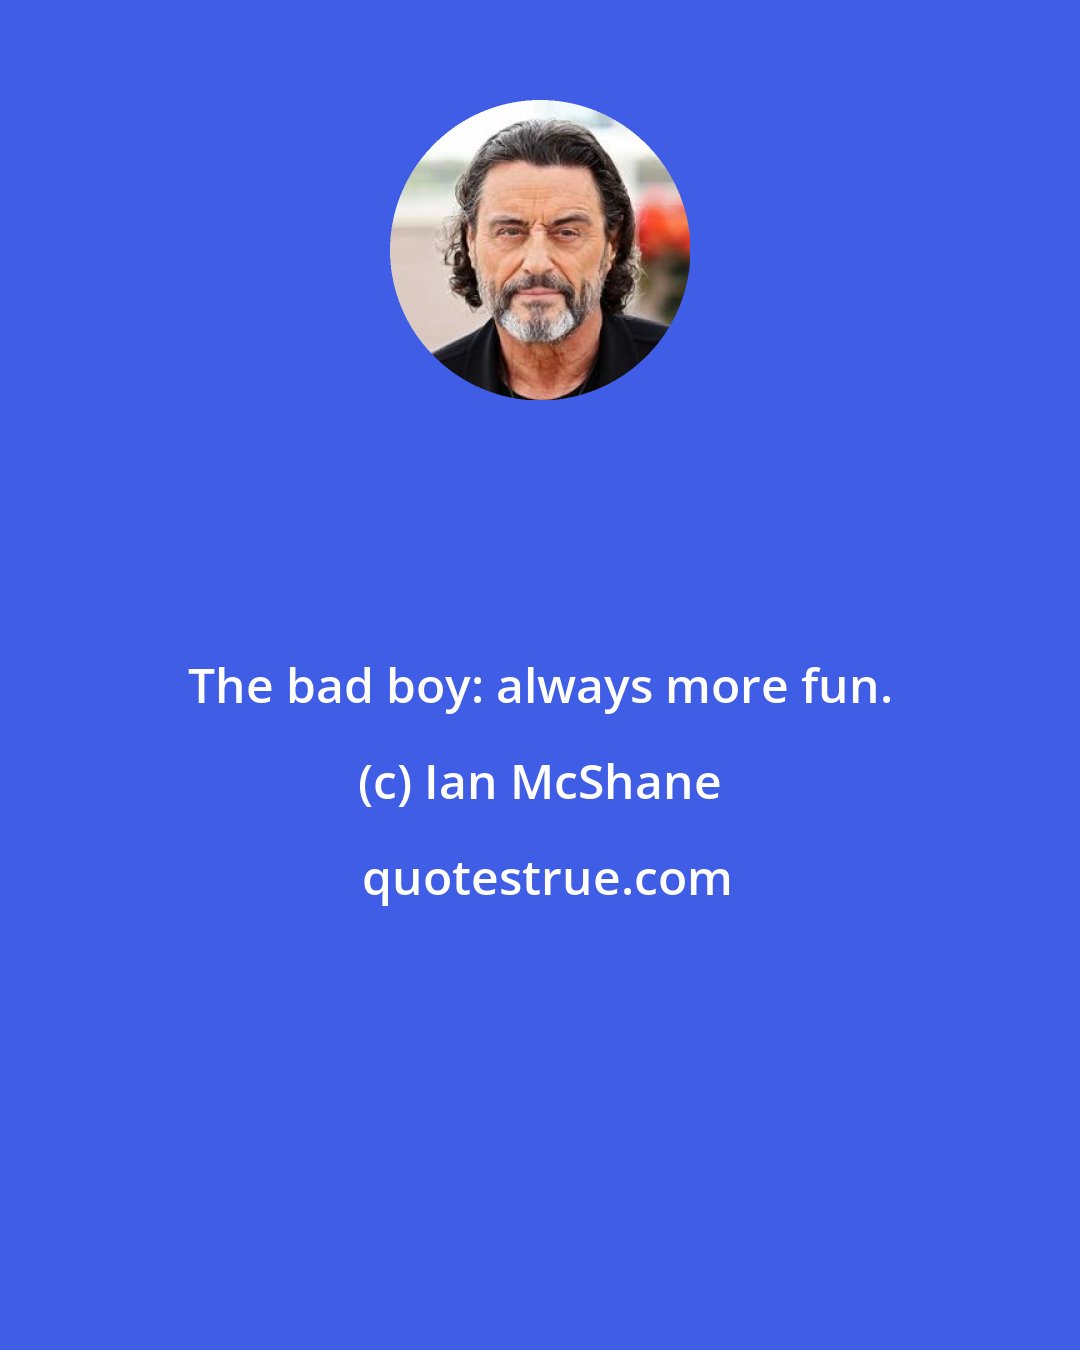 Ian McShane: The bad boy: always more fun.